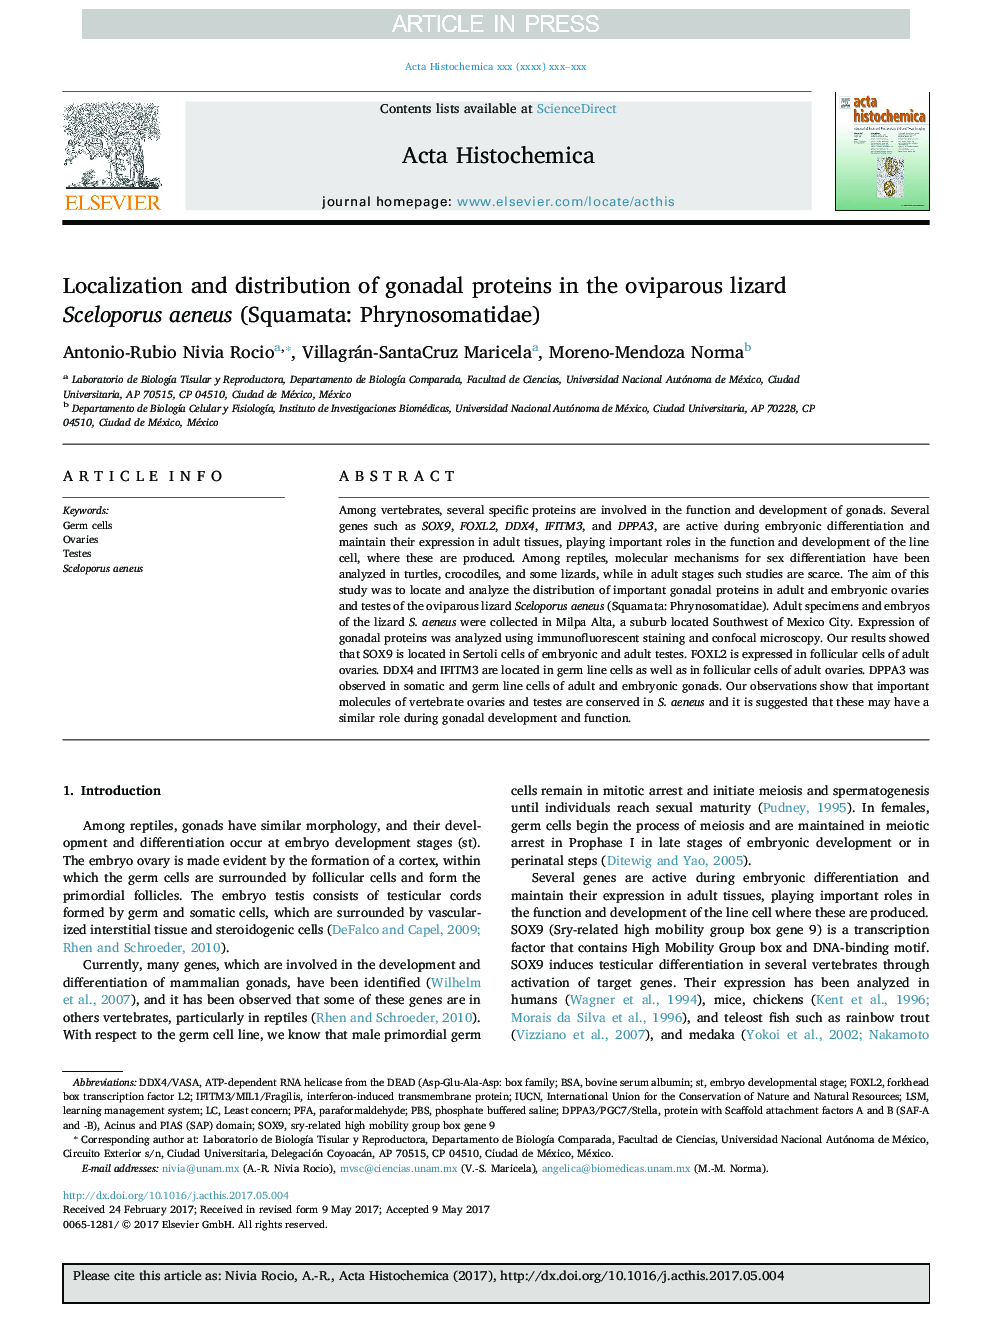 Localization and distribution of gonadal proteins in the oviparous lizard Sceloporus aeneus (Squamata: Phrynosomatidae)